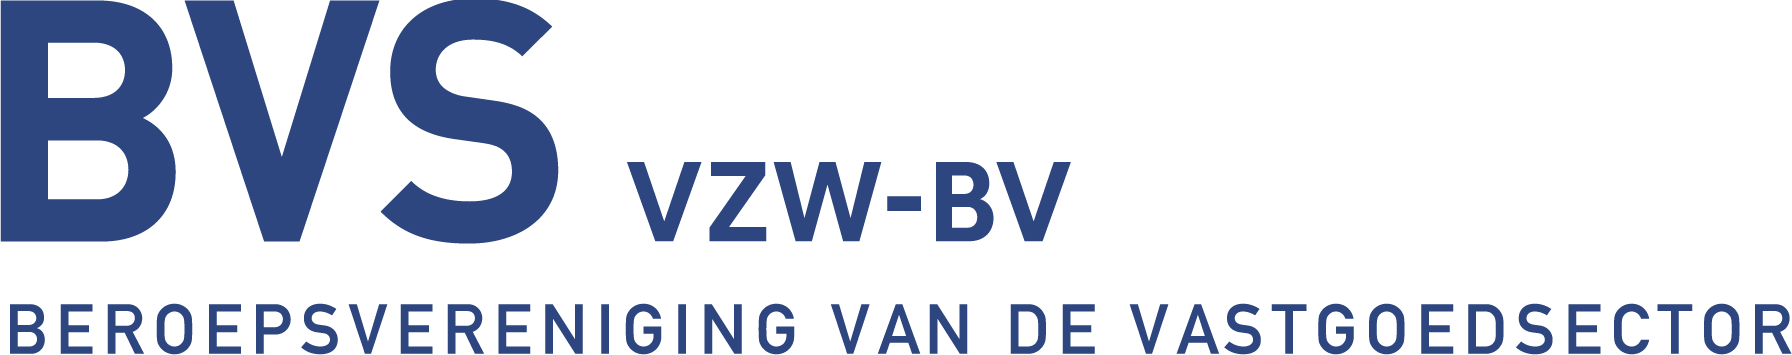 BVS (logo)